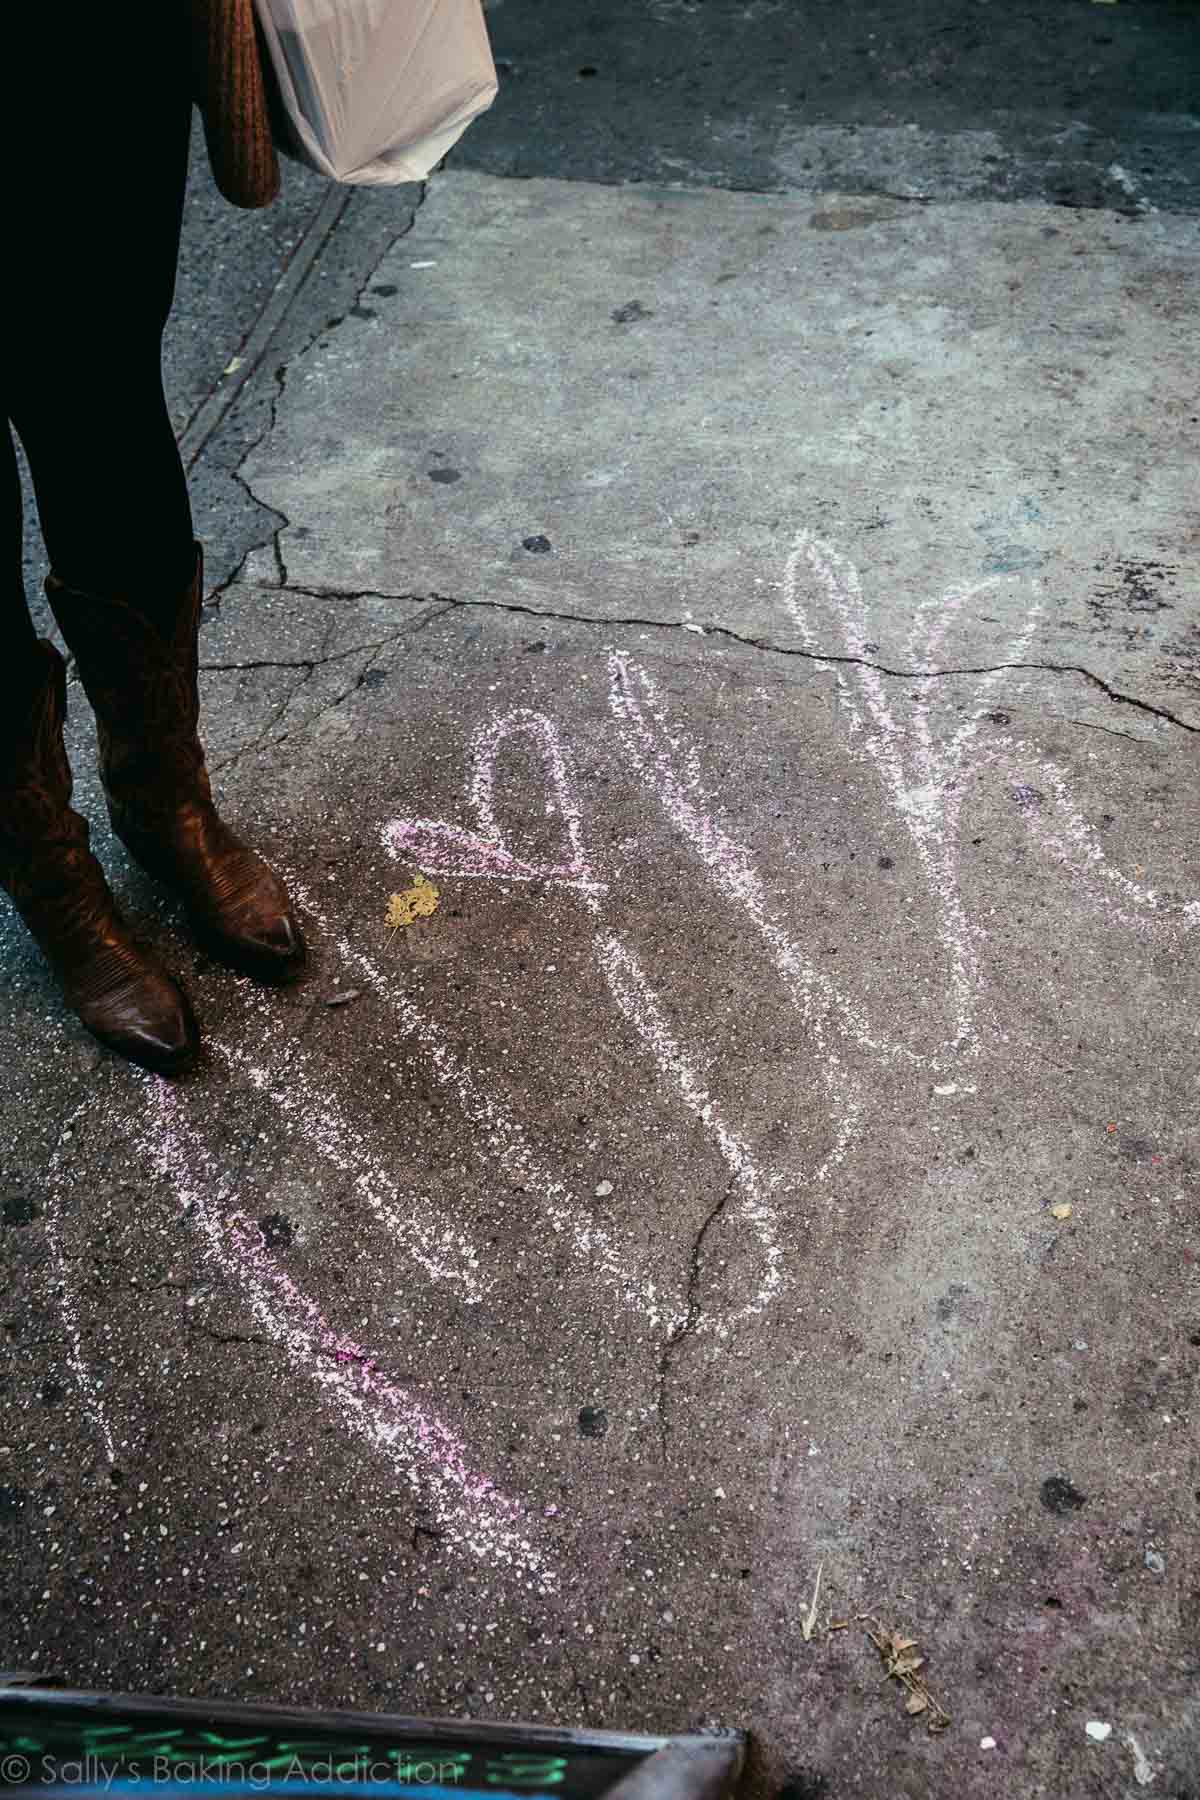 Milk written in chalk on the ground outside of Milk Bar in New York City